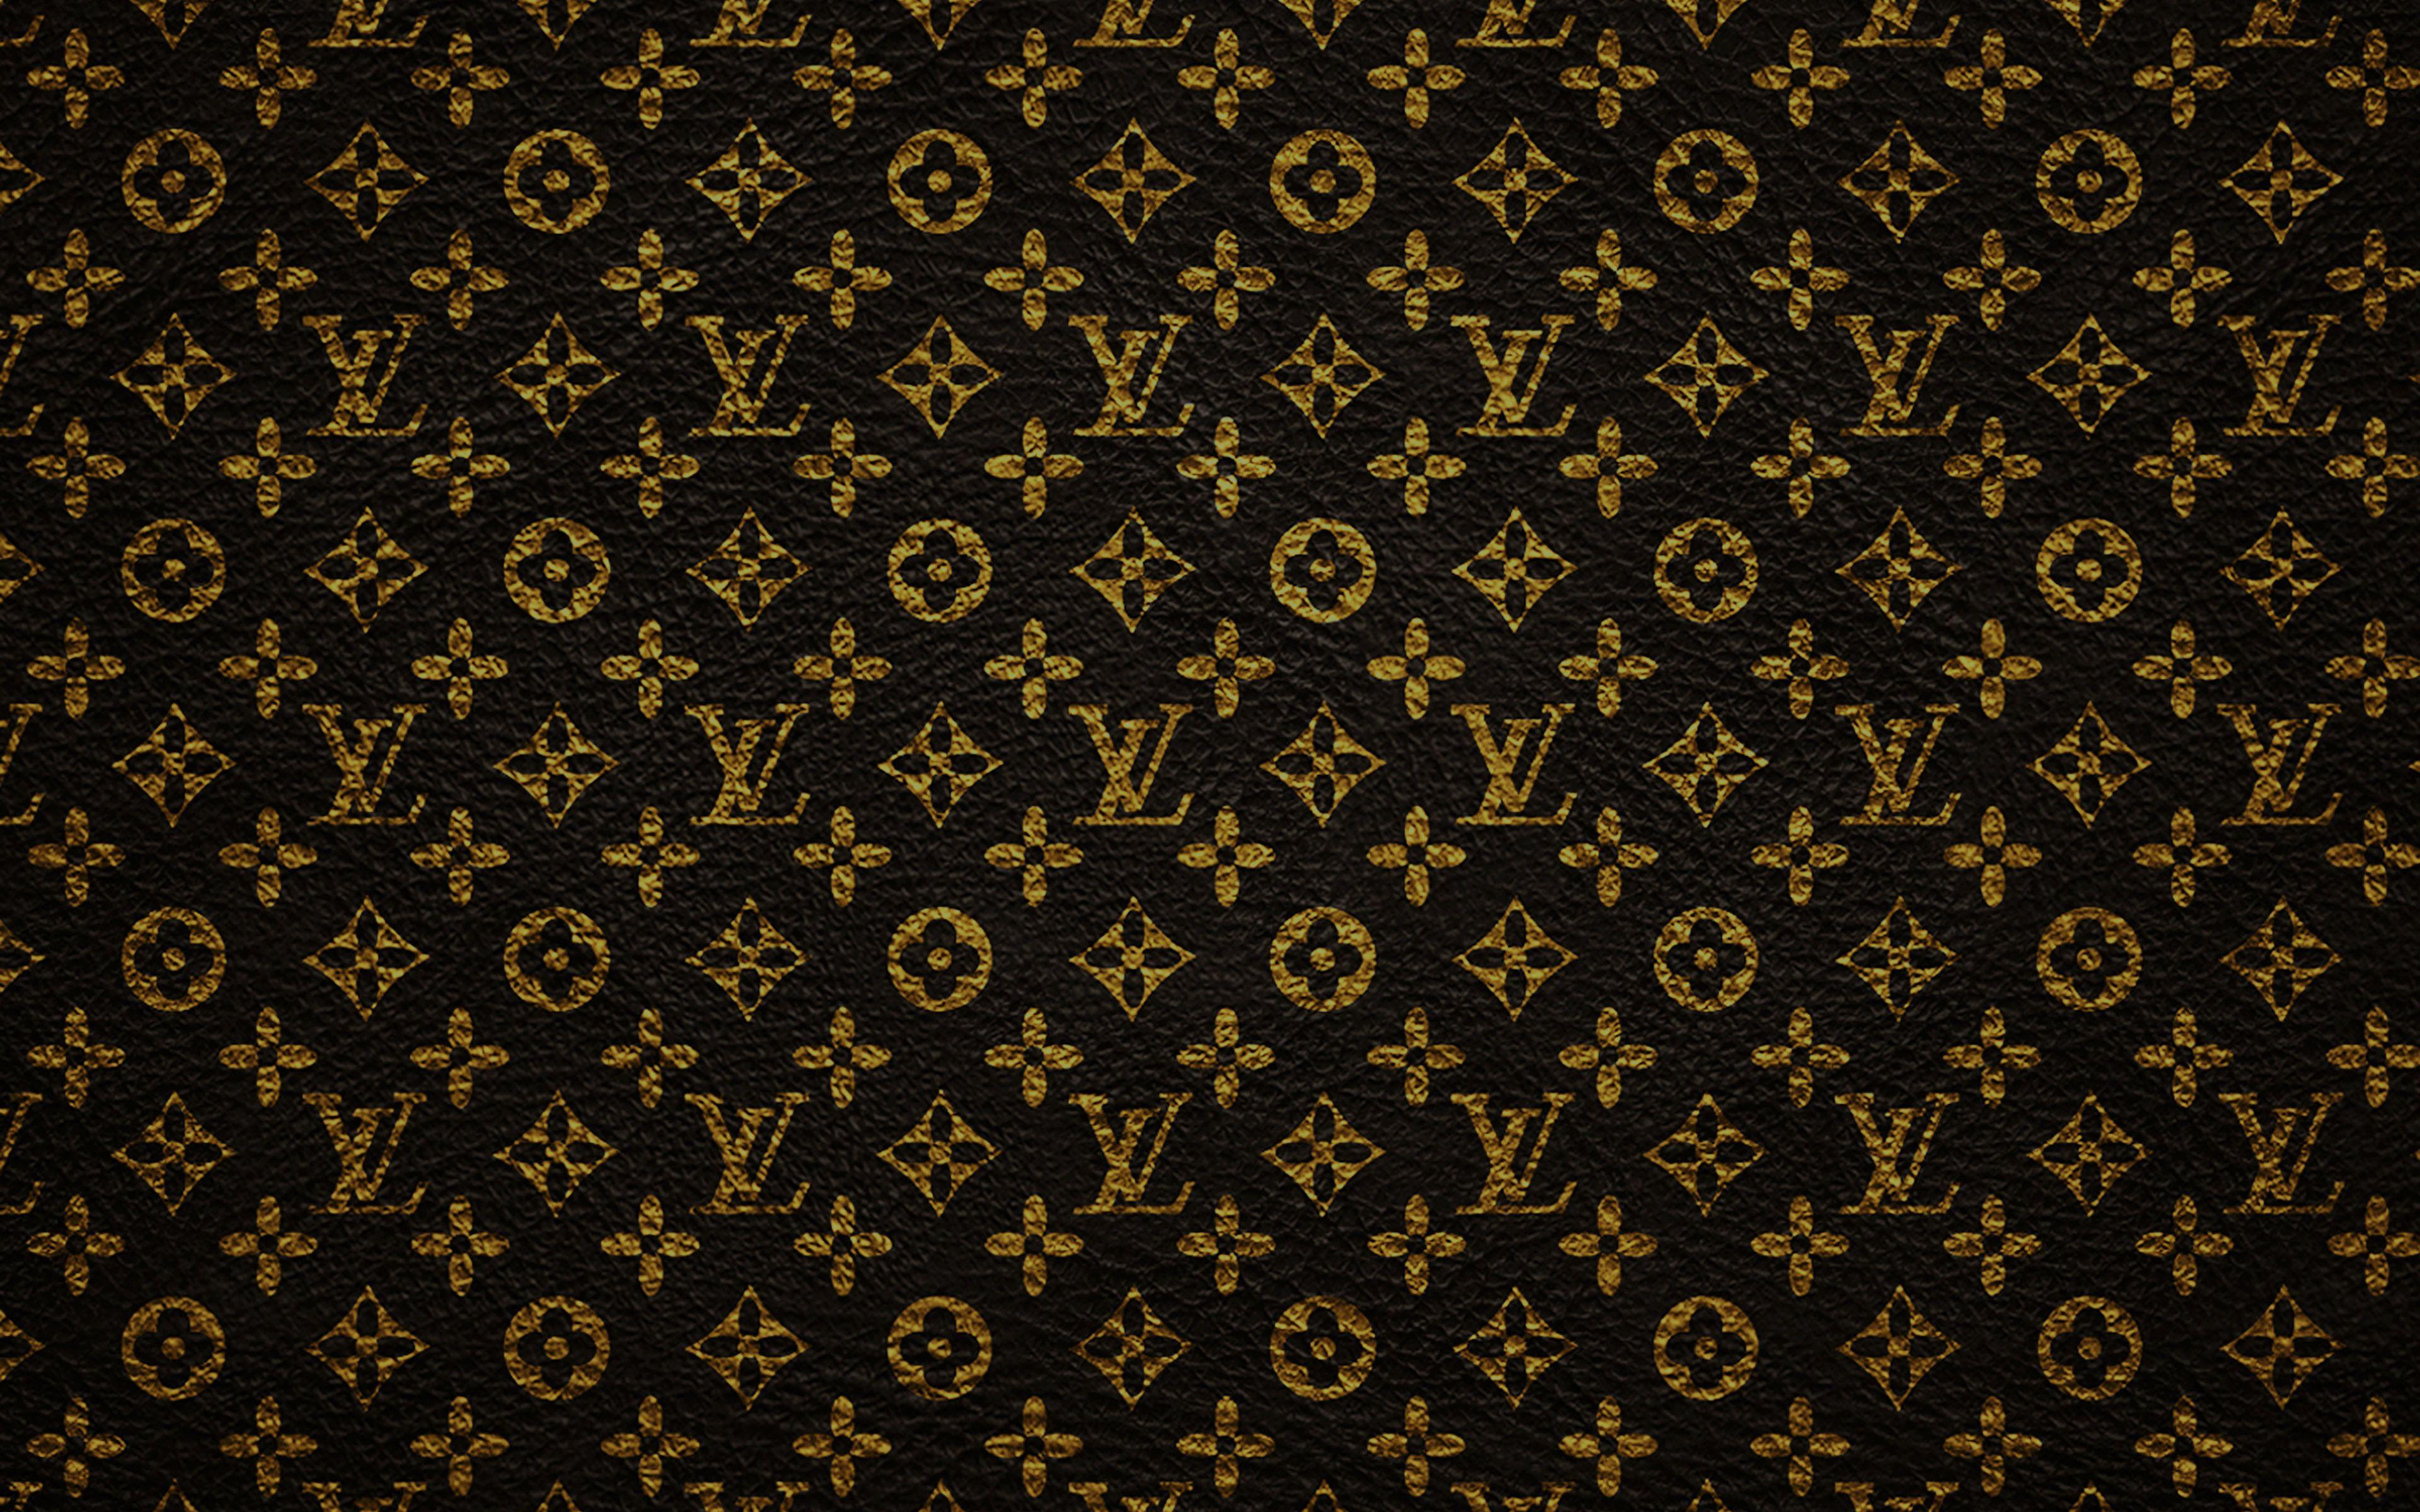 Pink and Gold Louis Vuitton iPhone wallpaper #Luxurydotcom